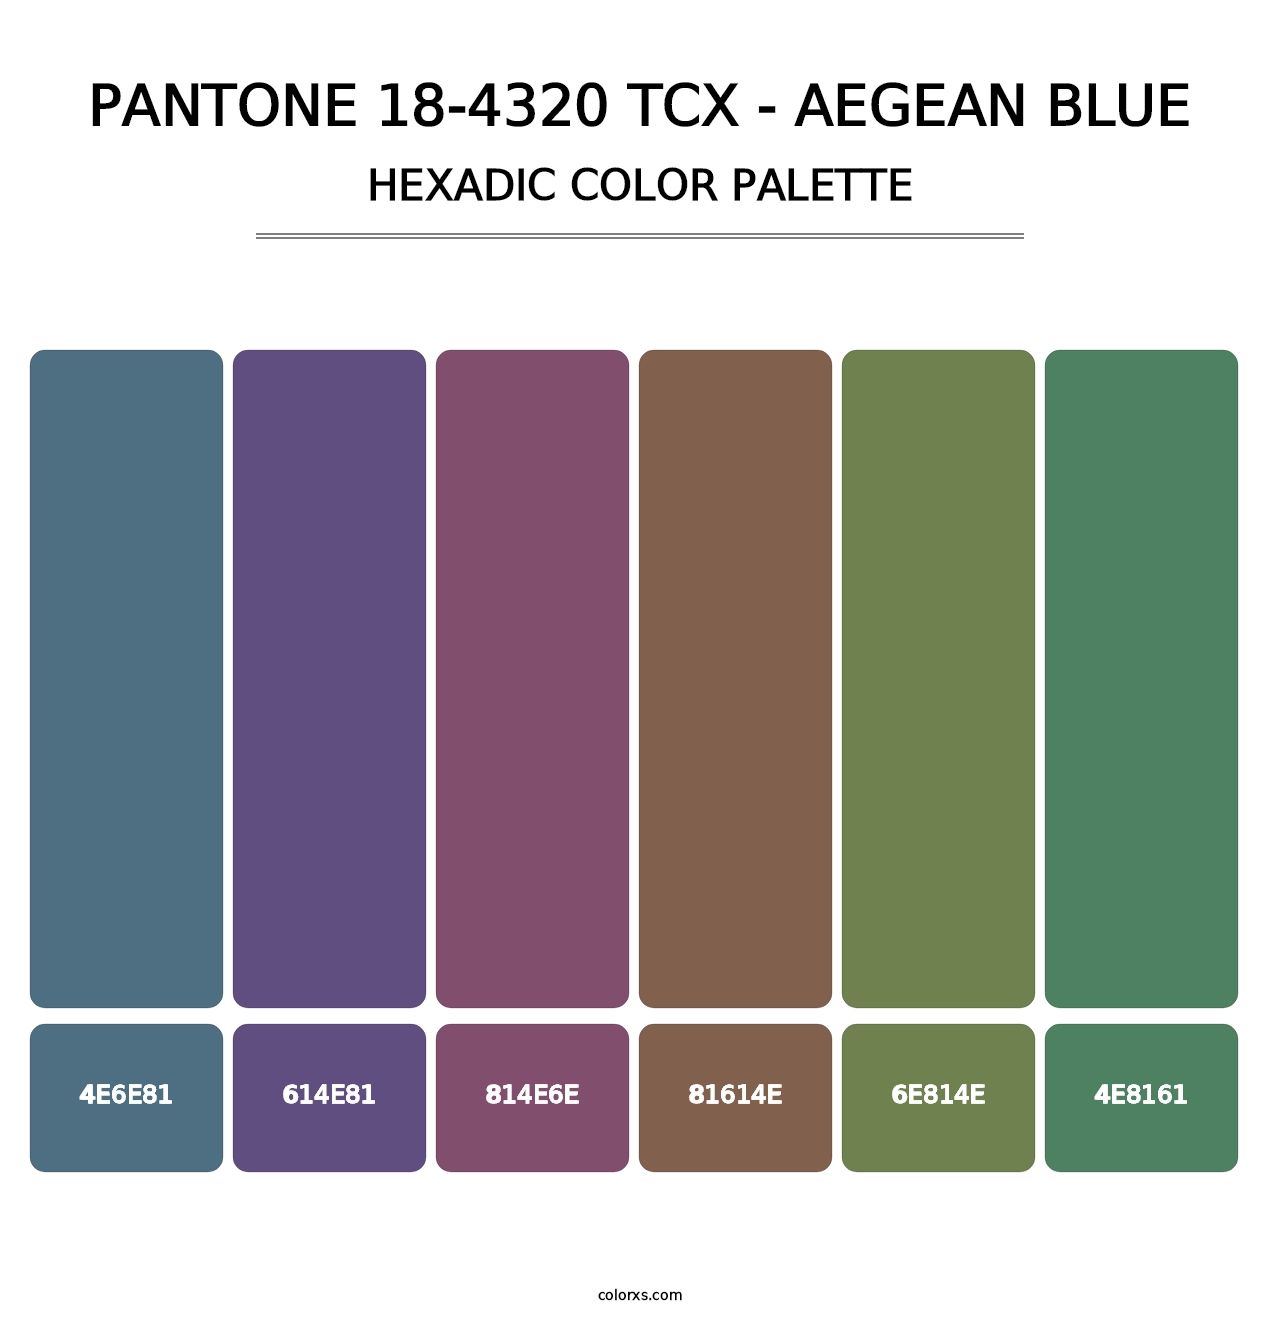 PANTONE 18-4320 TCX - Aegean Blue - Hexadic Color Palette